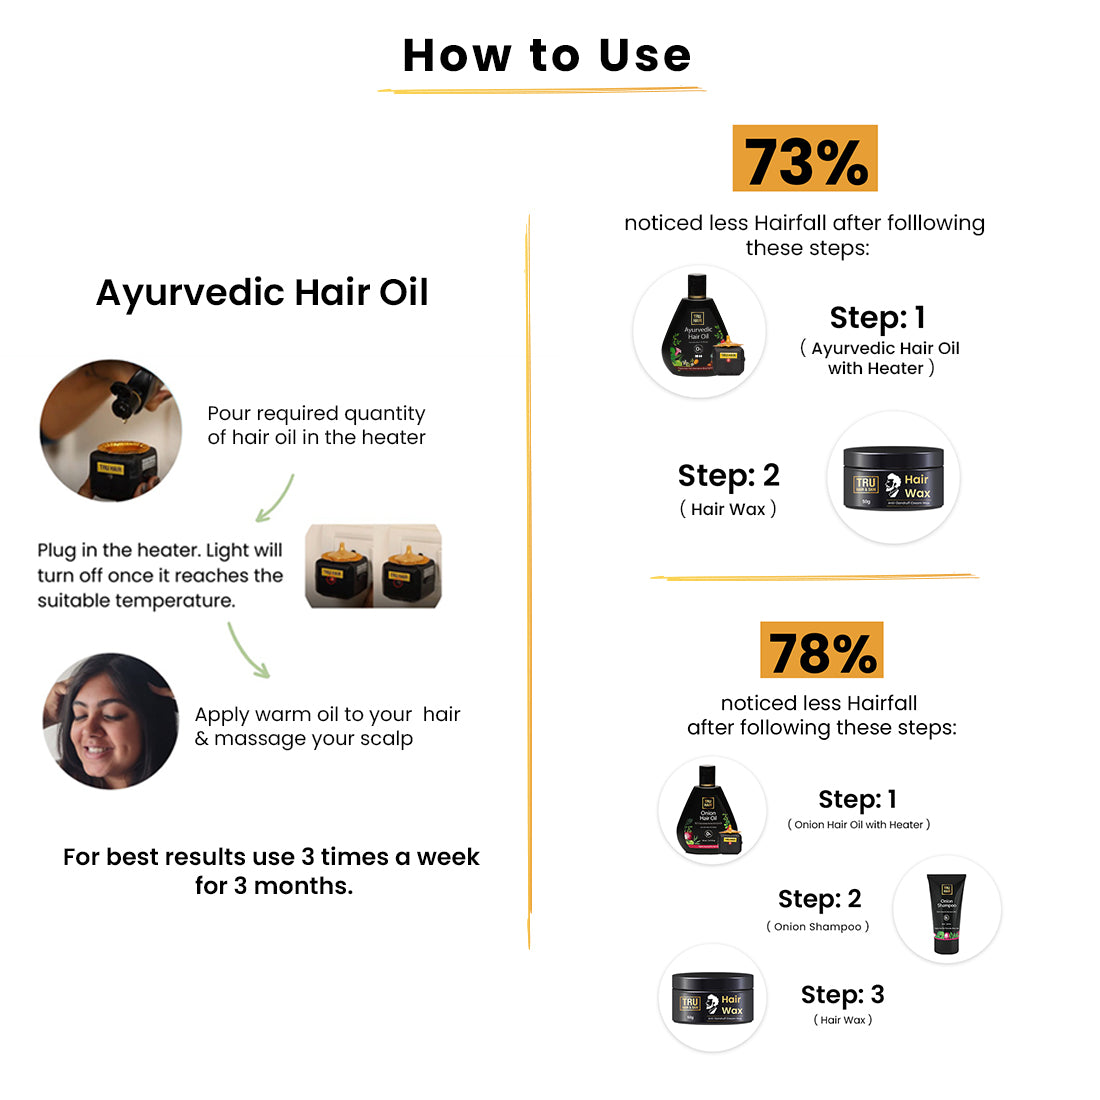 Ayurvedic oil with Heater 50ml +Free Hair Wax 50gms